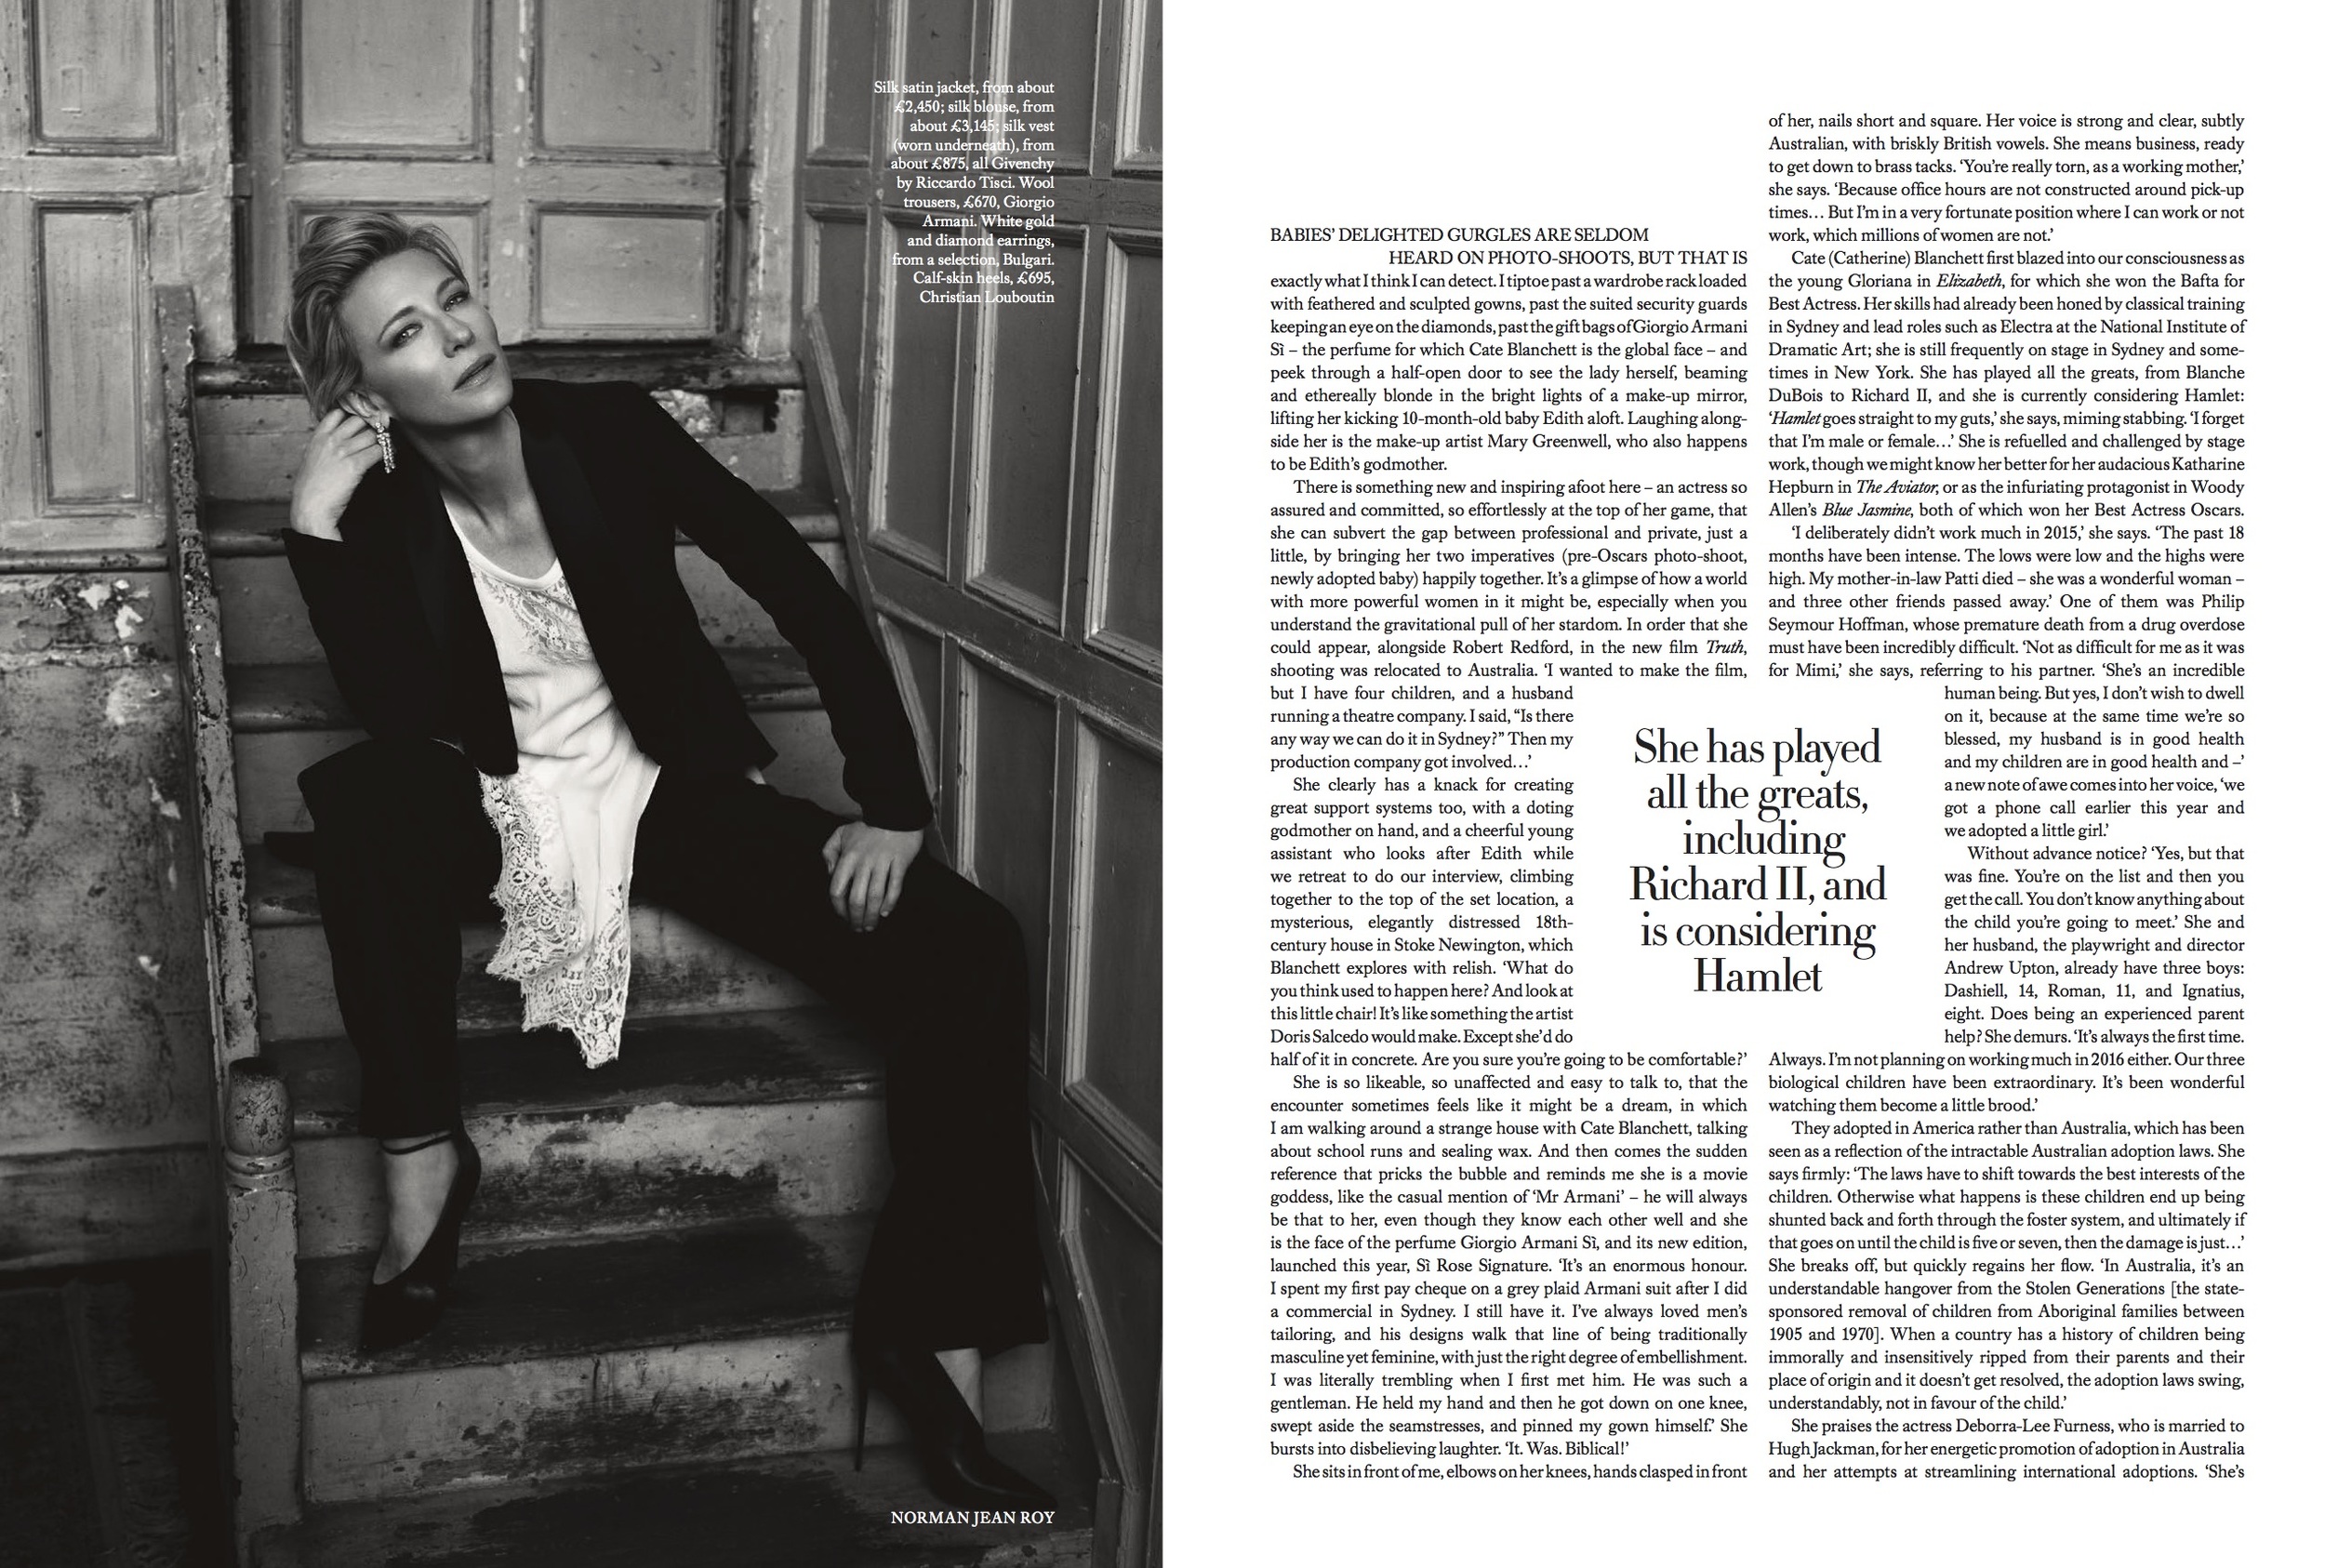 Cate Blanchett Cover Story for Harper's Bazaar, styled by Charlie Harrington. Spread 2.